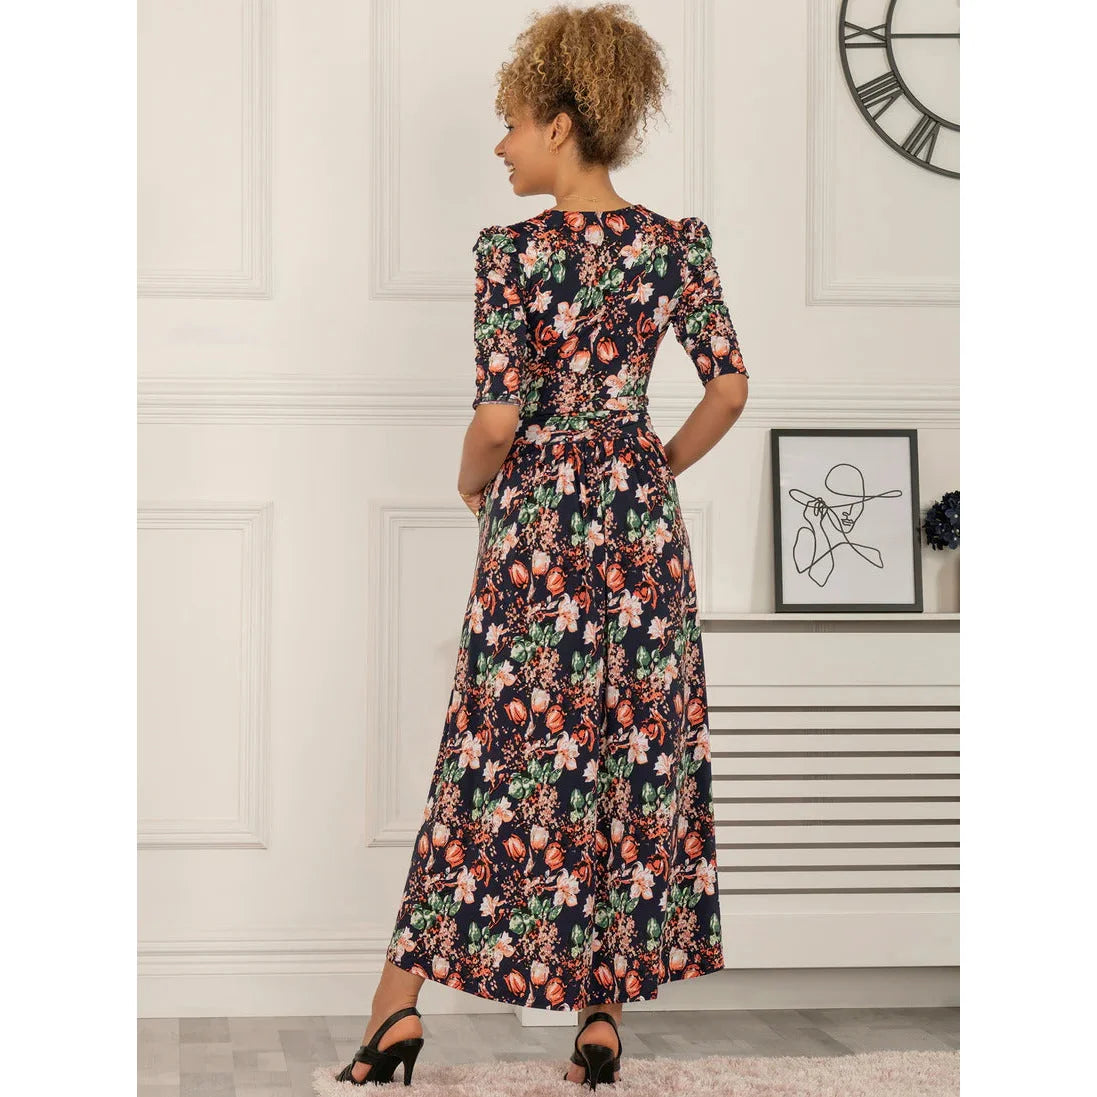 Jolie Moi Vintage Ruched Sleeve Jersey Navy Floral Print Dress